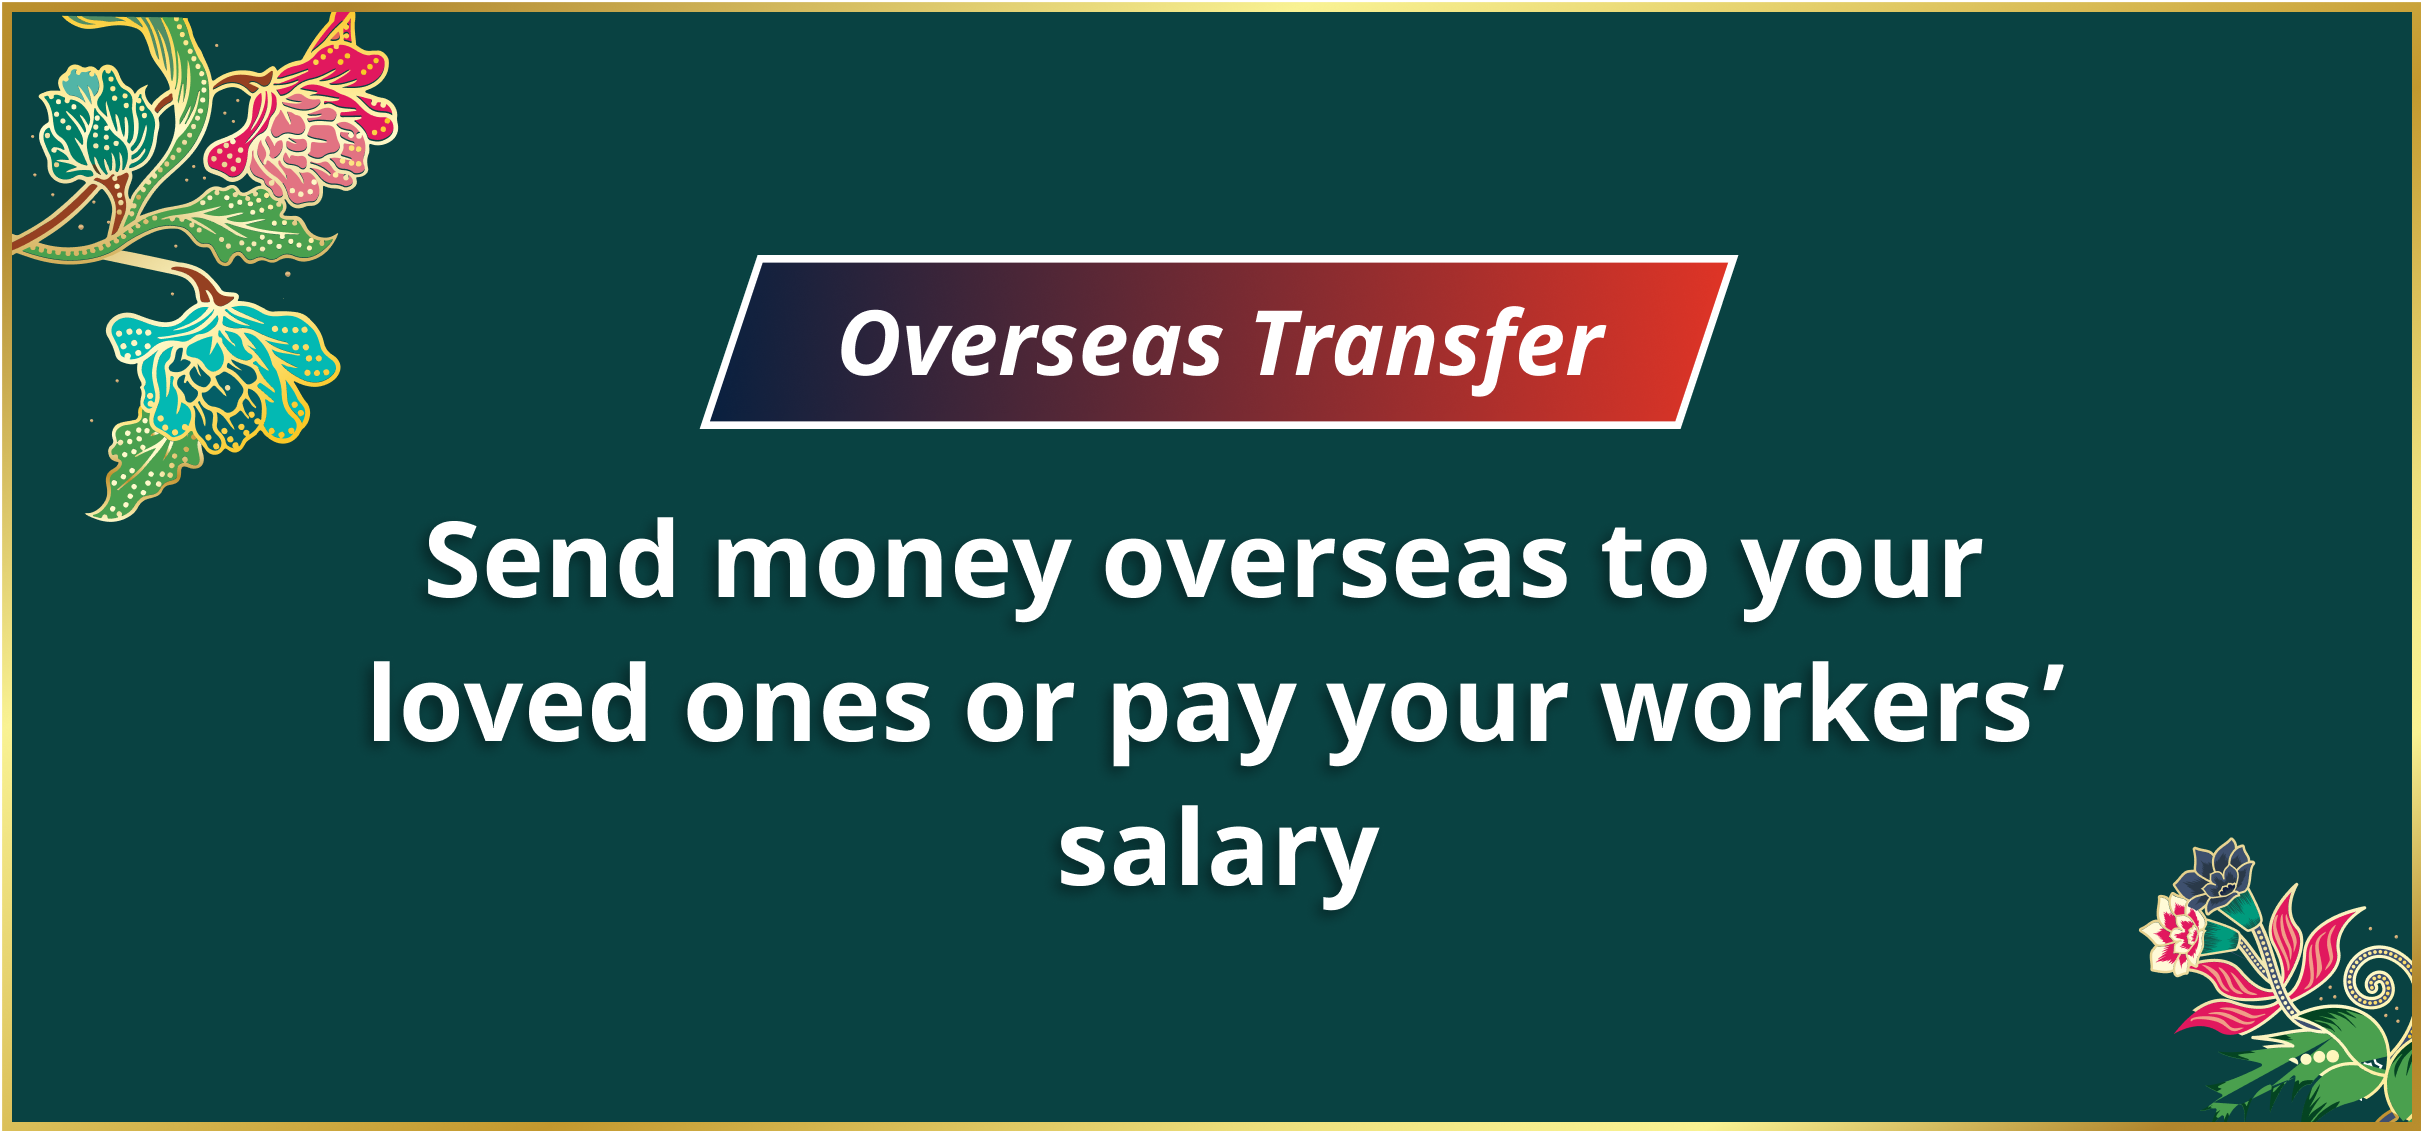 Overseas Transfer